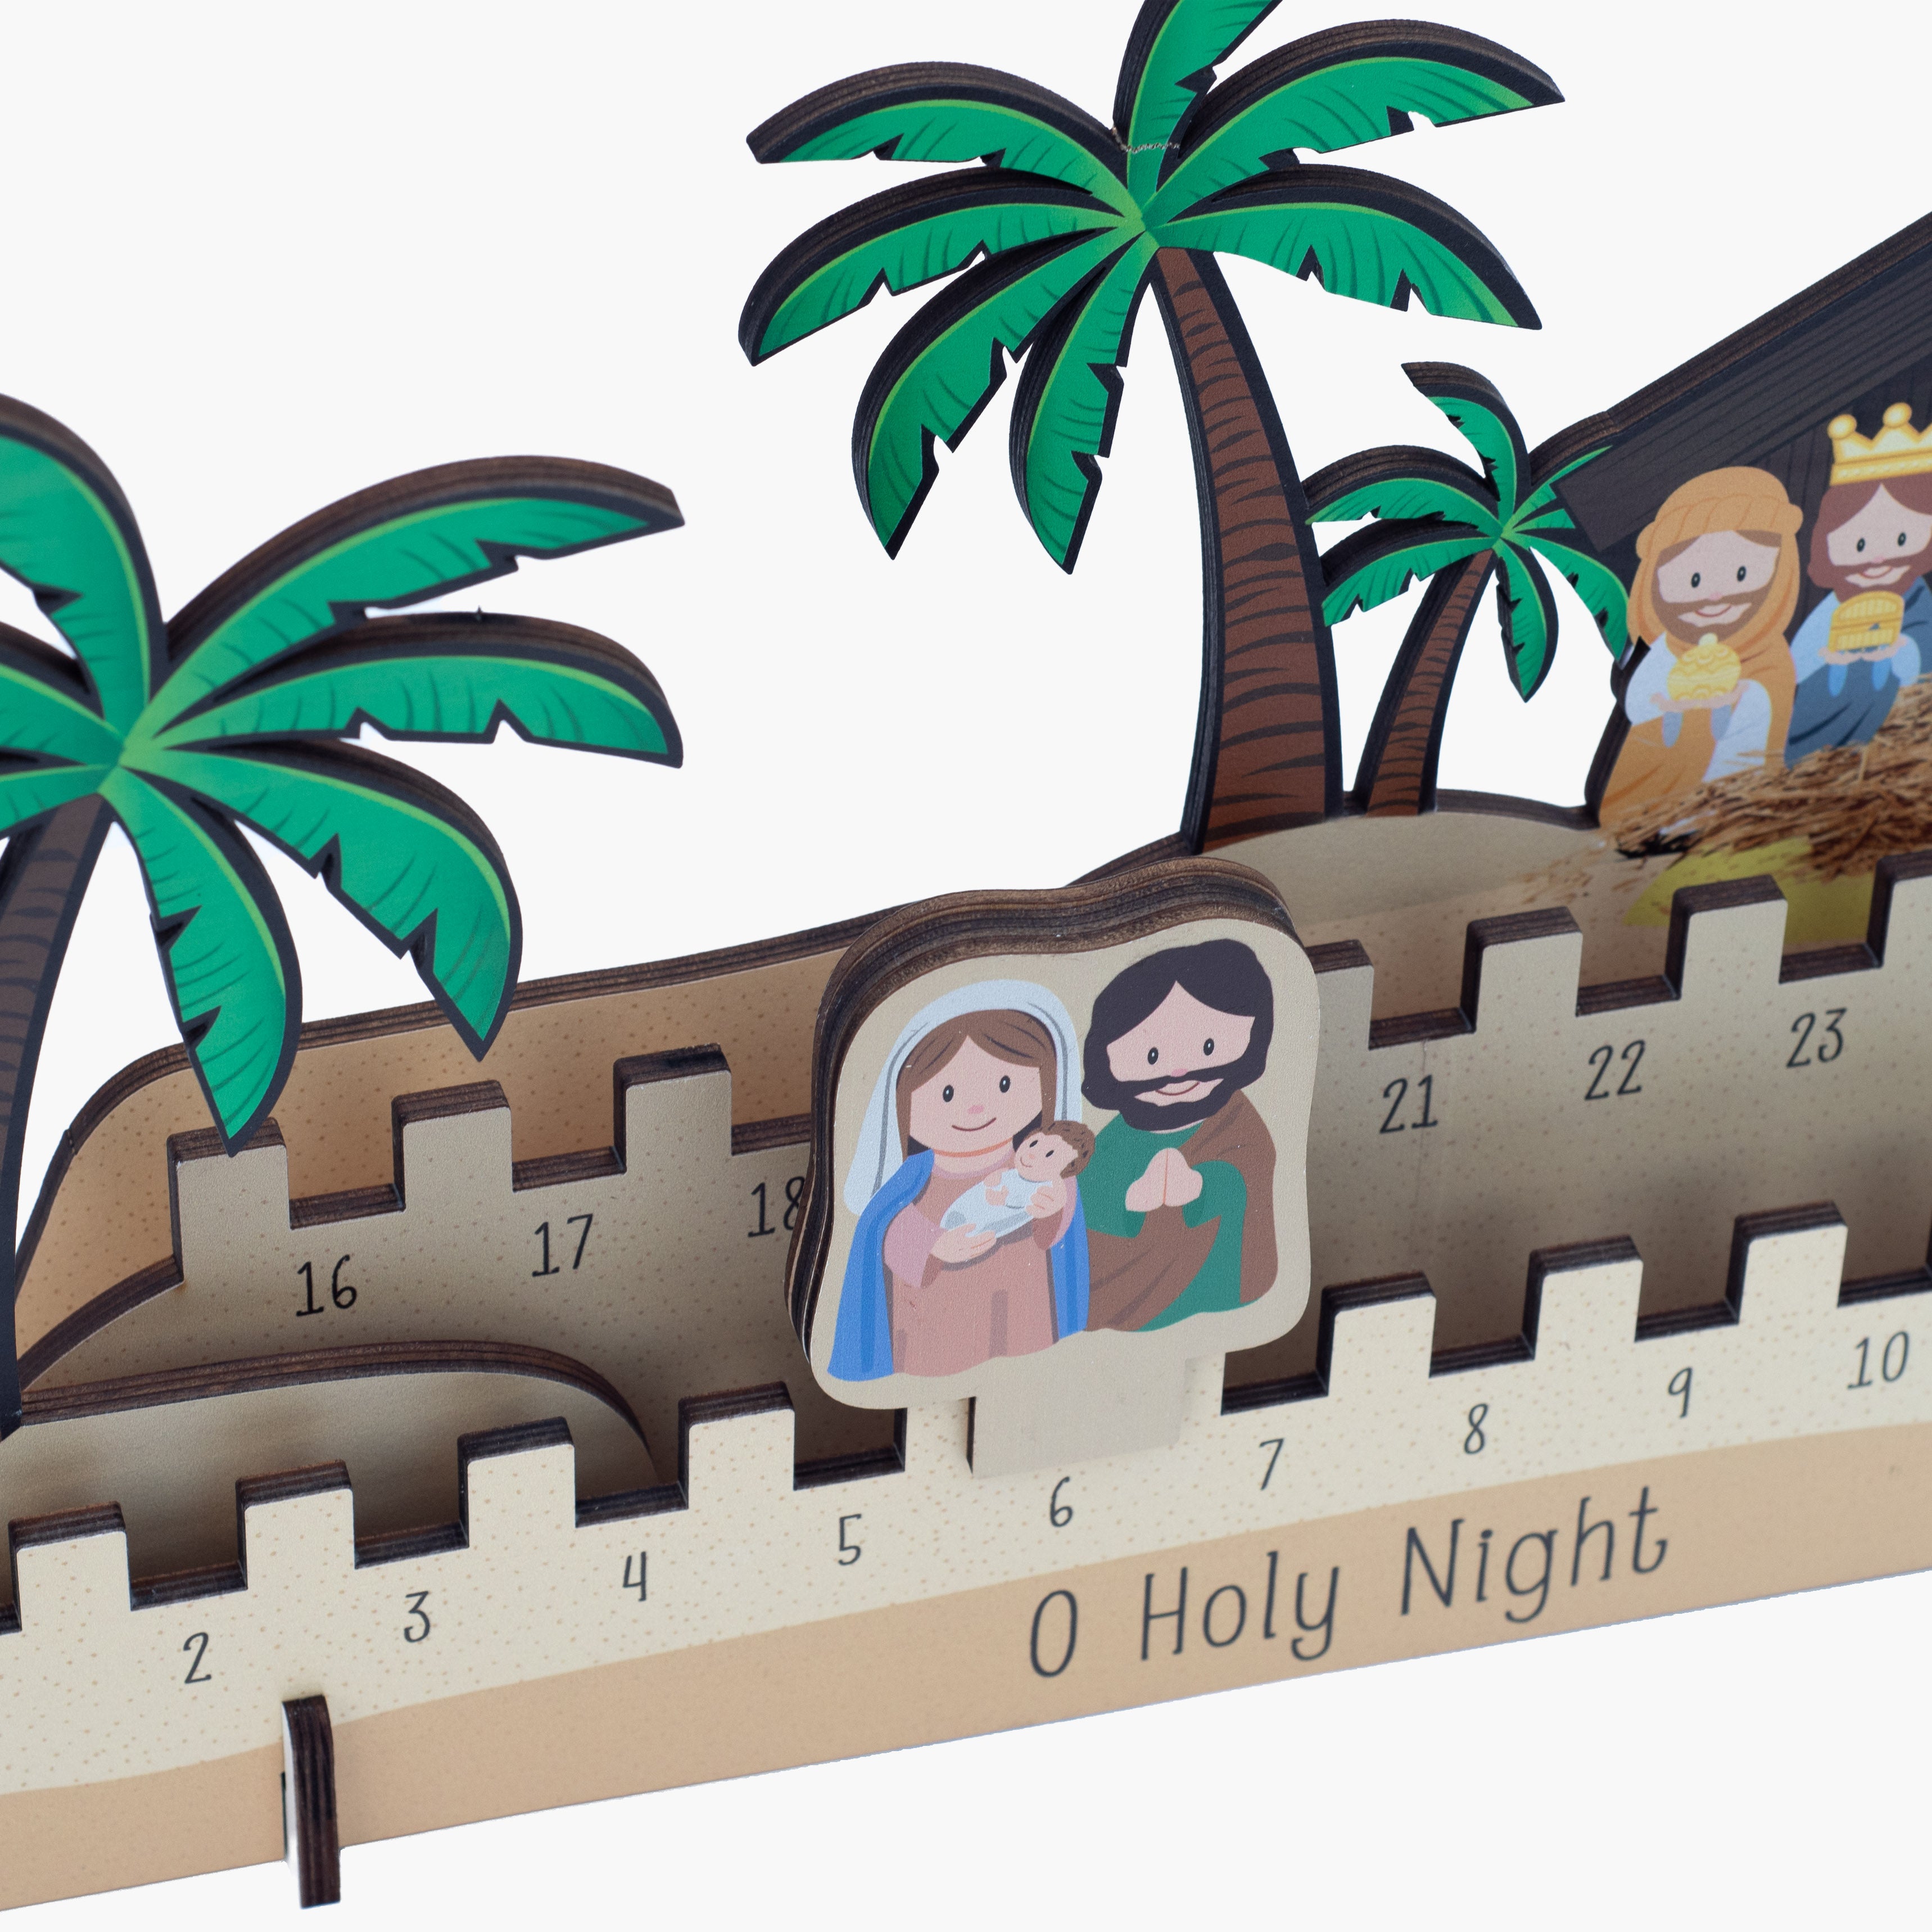 O Holy Night Countdown to Christmas Calendar